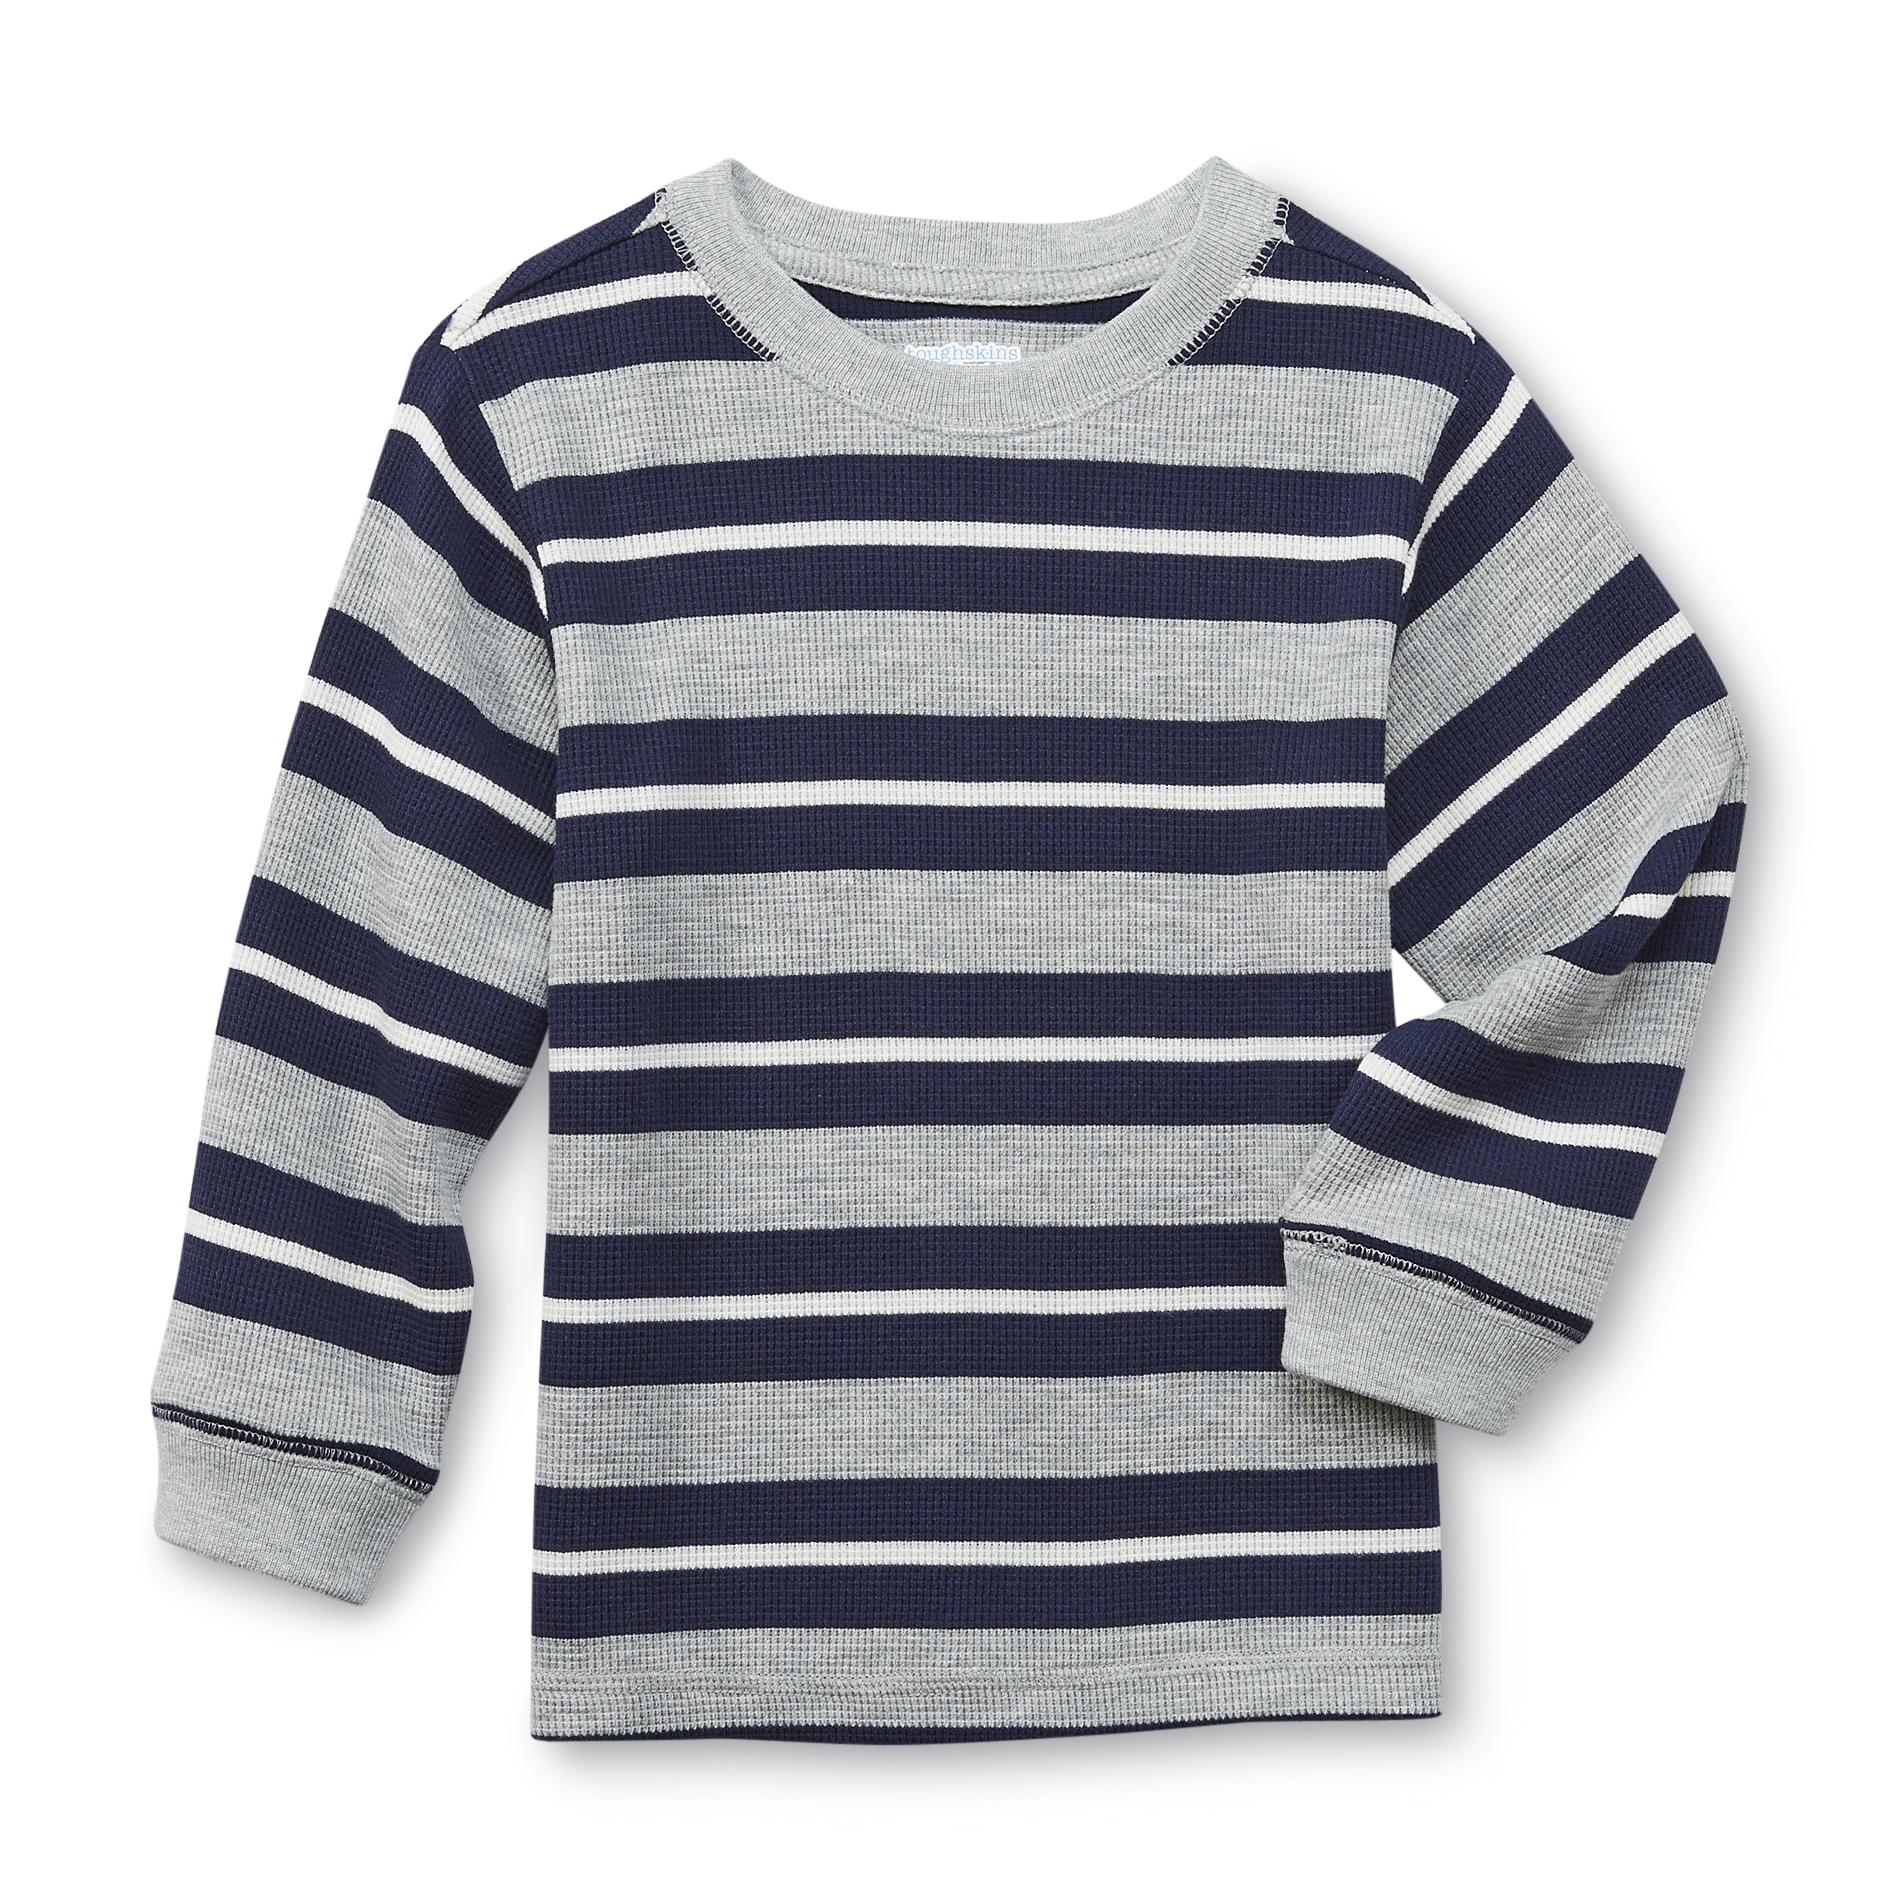 Toughskins Infant & Toddler Boy's Thermal Shirt - Striped